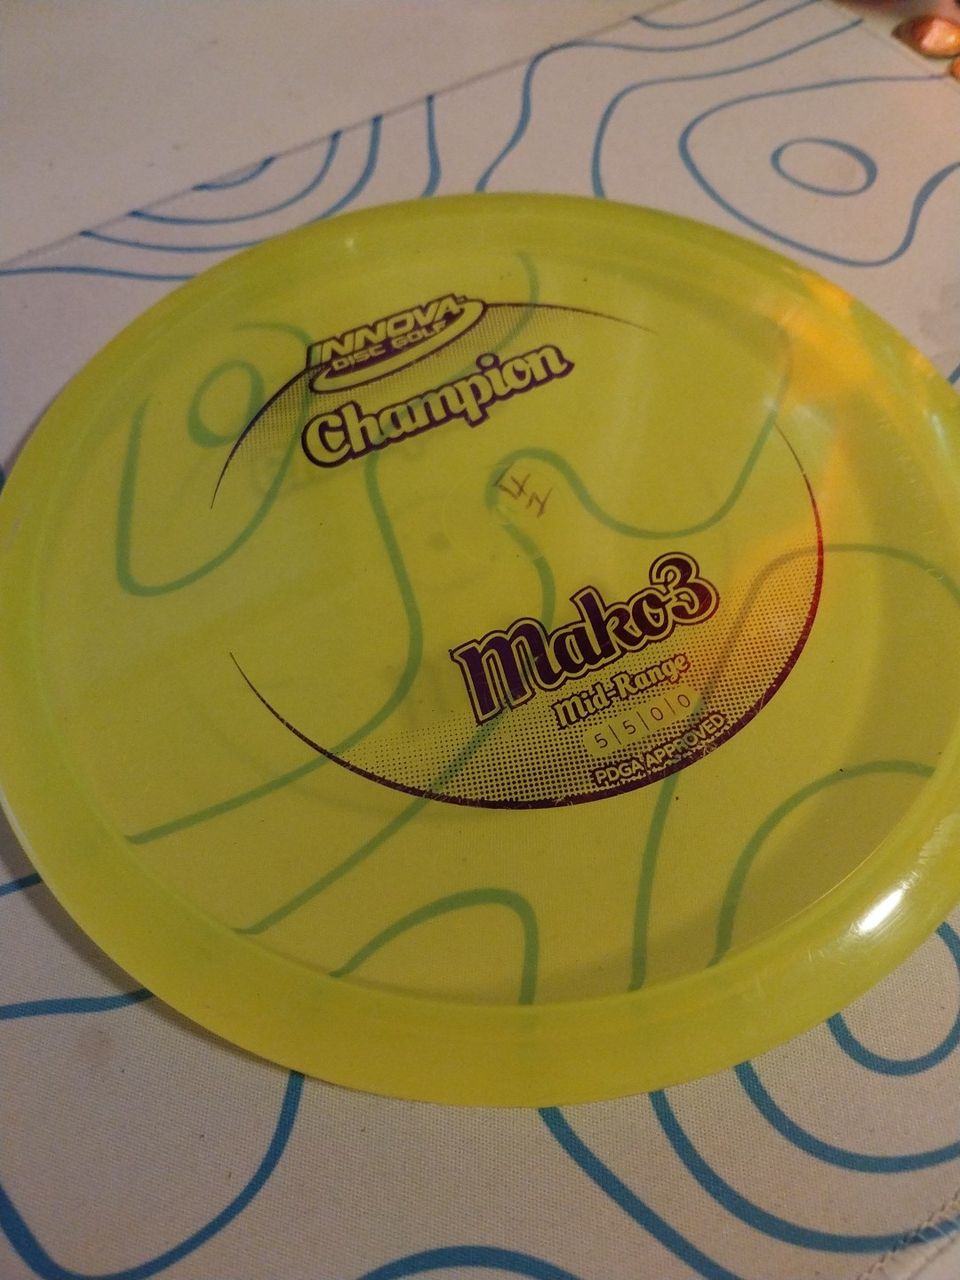 Innova champion mako3 frisbeegolfkiekko